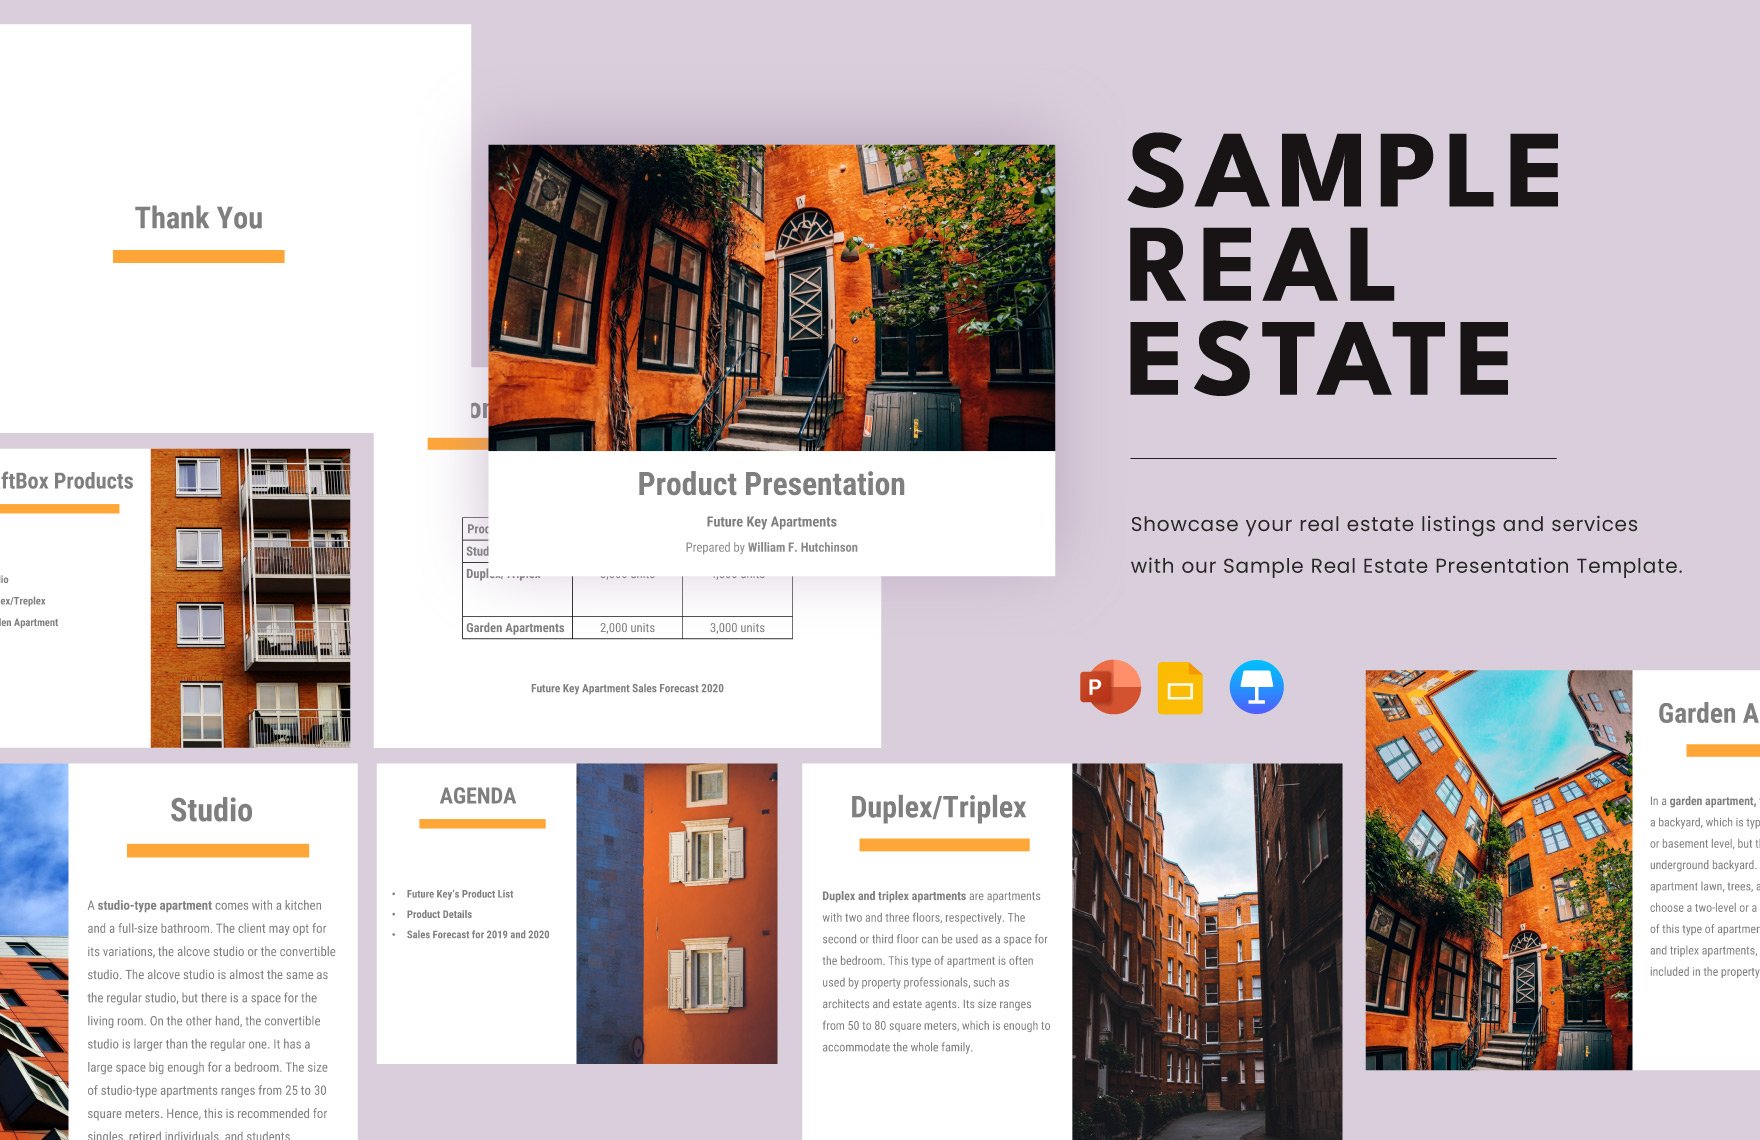 Sample Real Estate Presentation Template